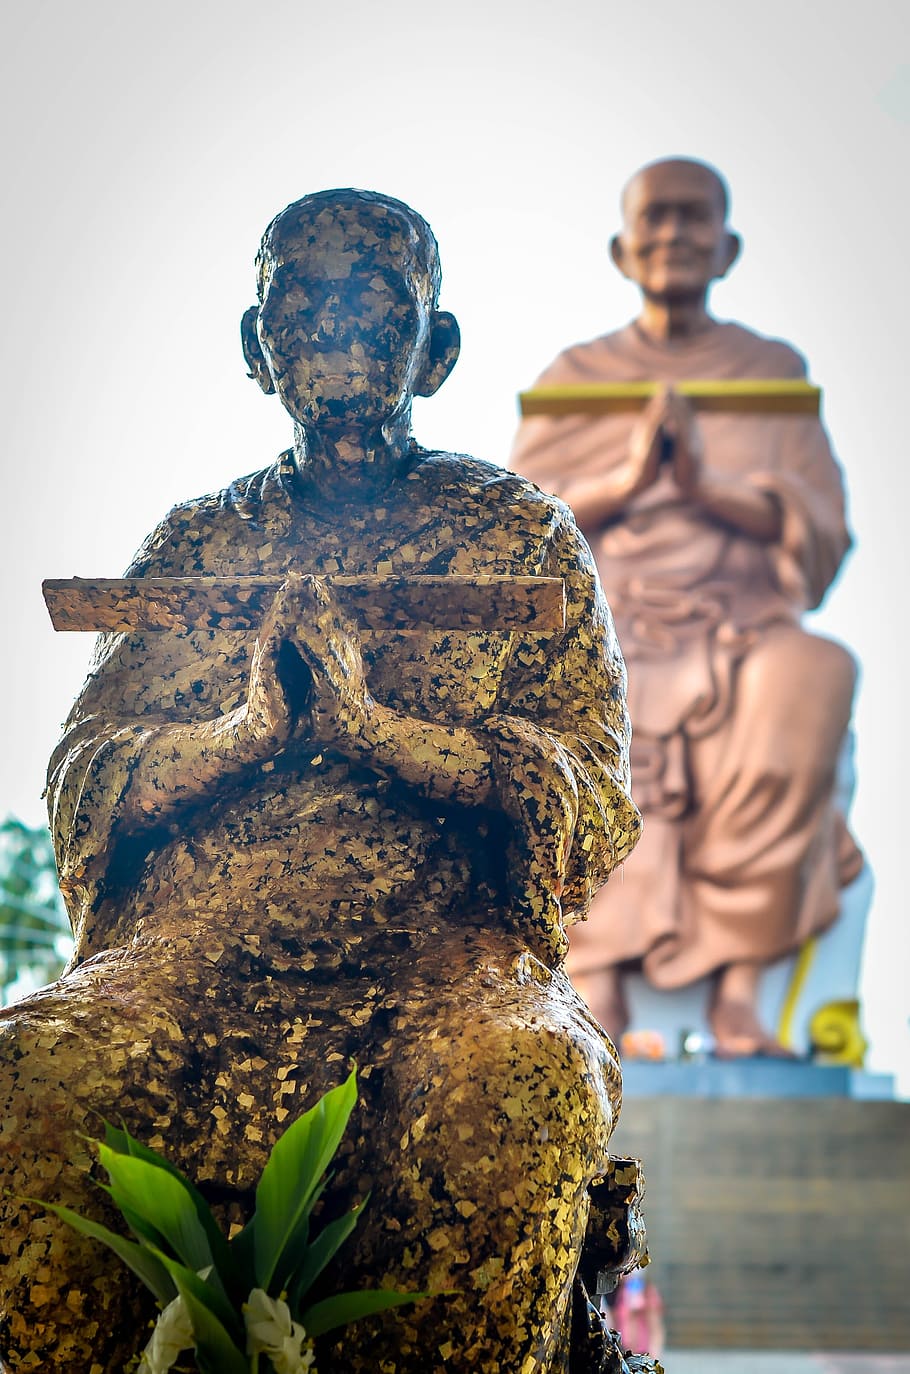 monge tailandês, ayudhaya, tailândia, -, contrastando, estátuas., tailandês, monge, budismo, cultura